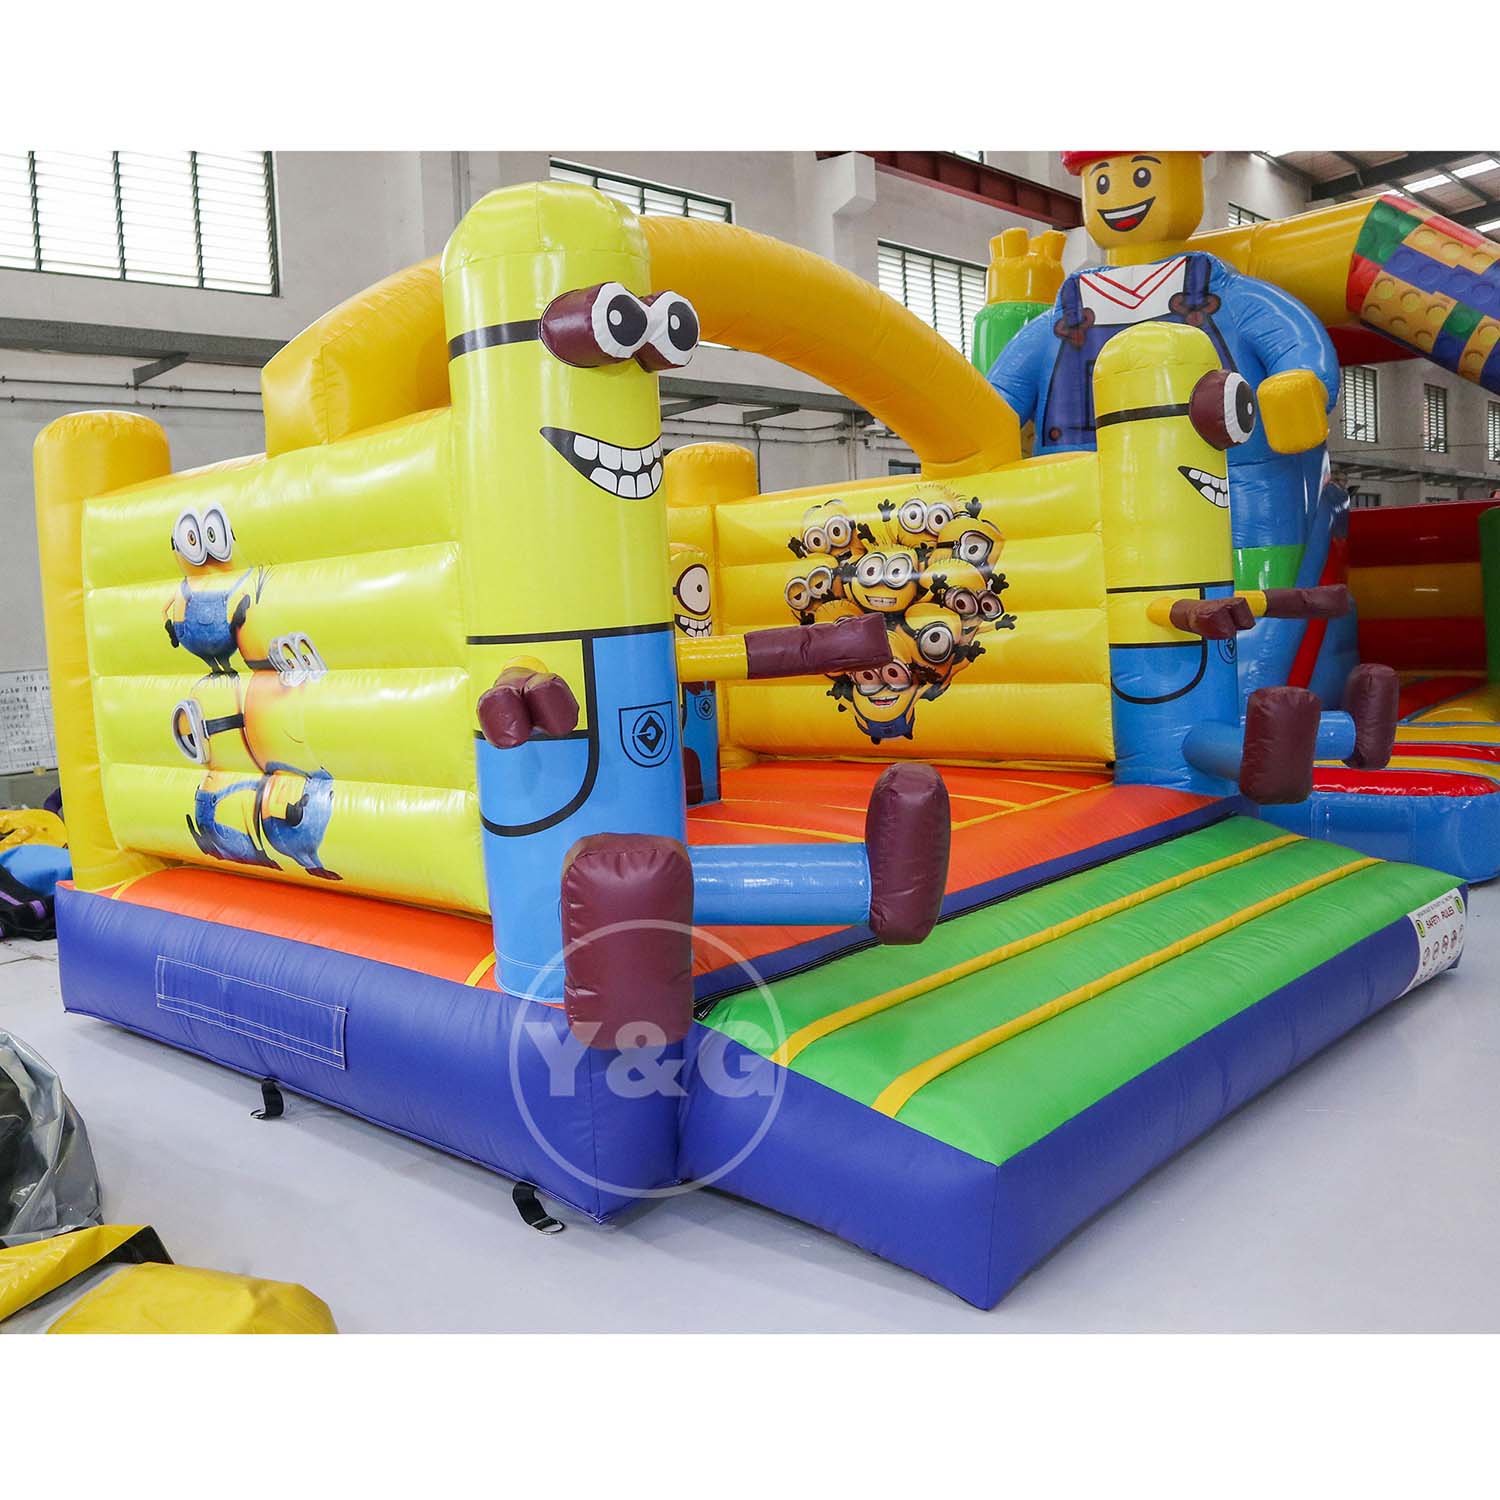 Fun Minion Inflatable Bounce HouseYG-157